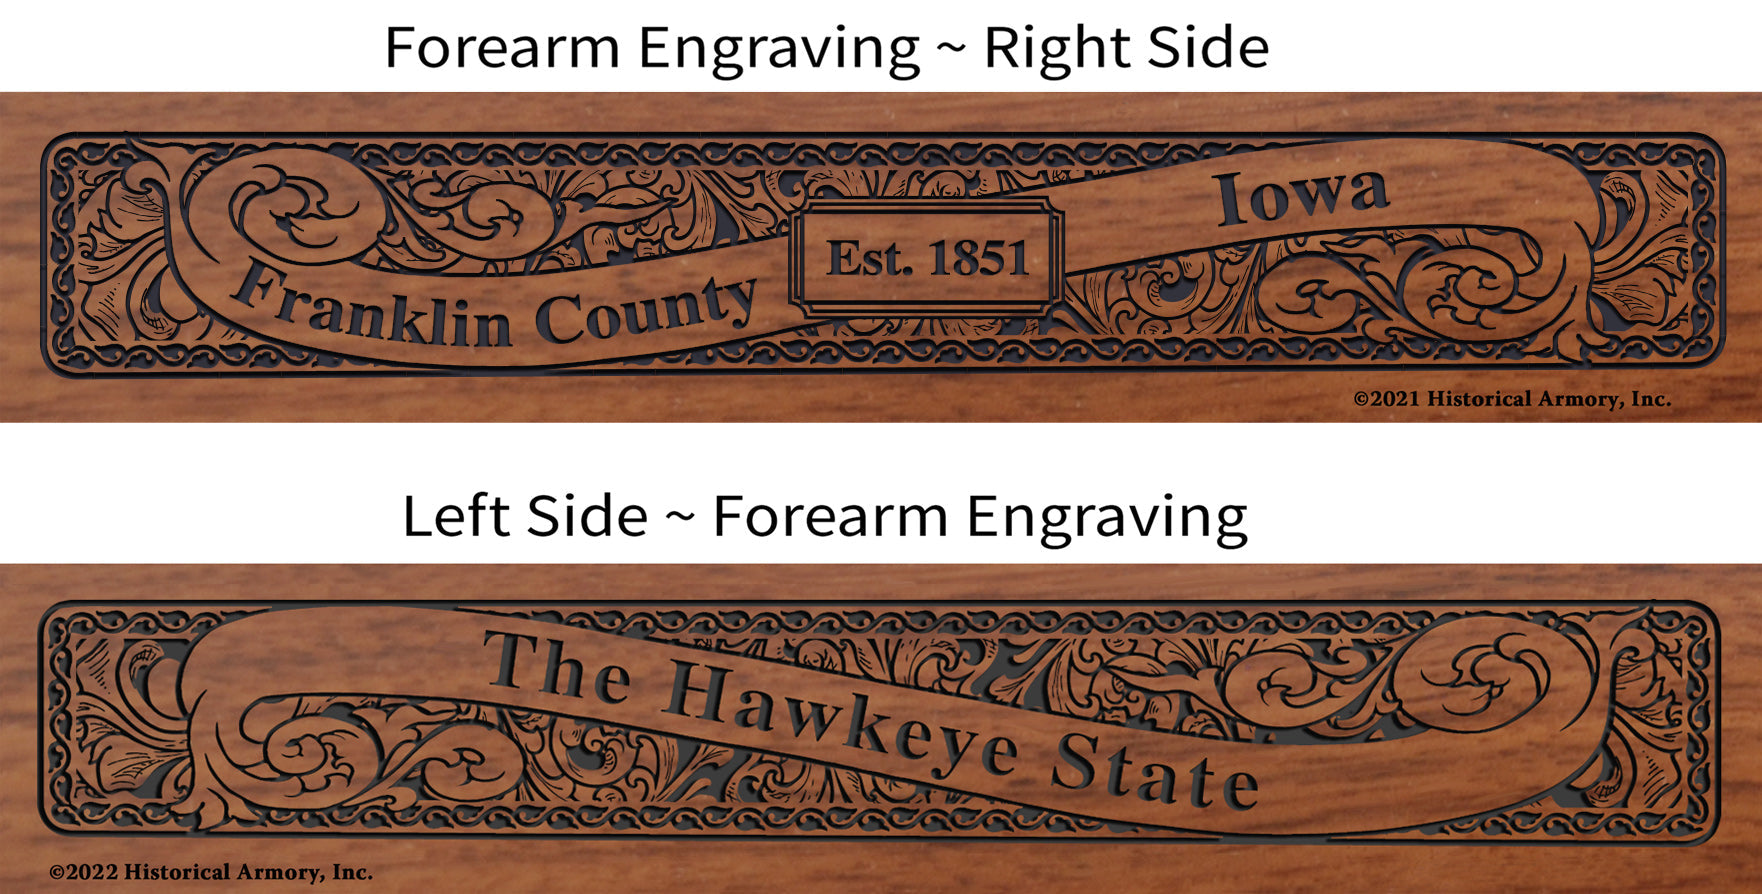 Franklin County Iowa Engraved Rifle Forearm